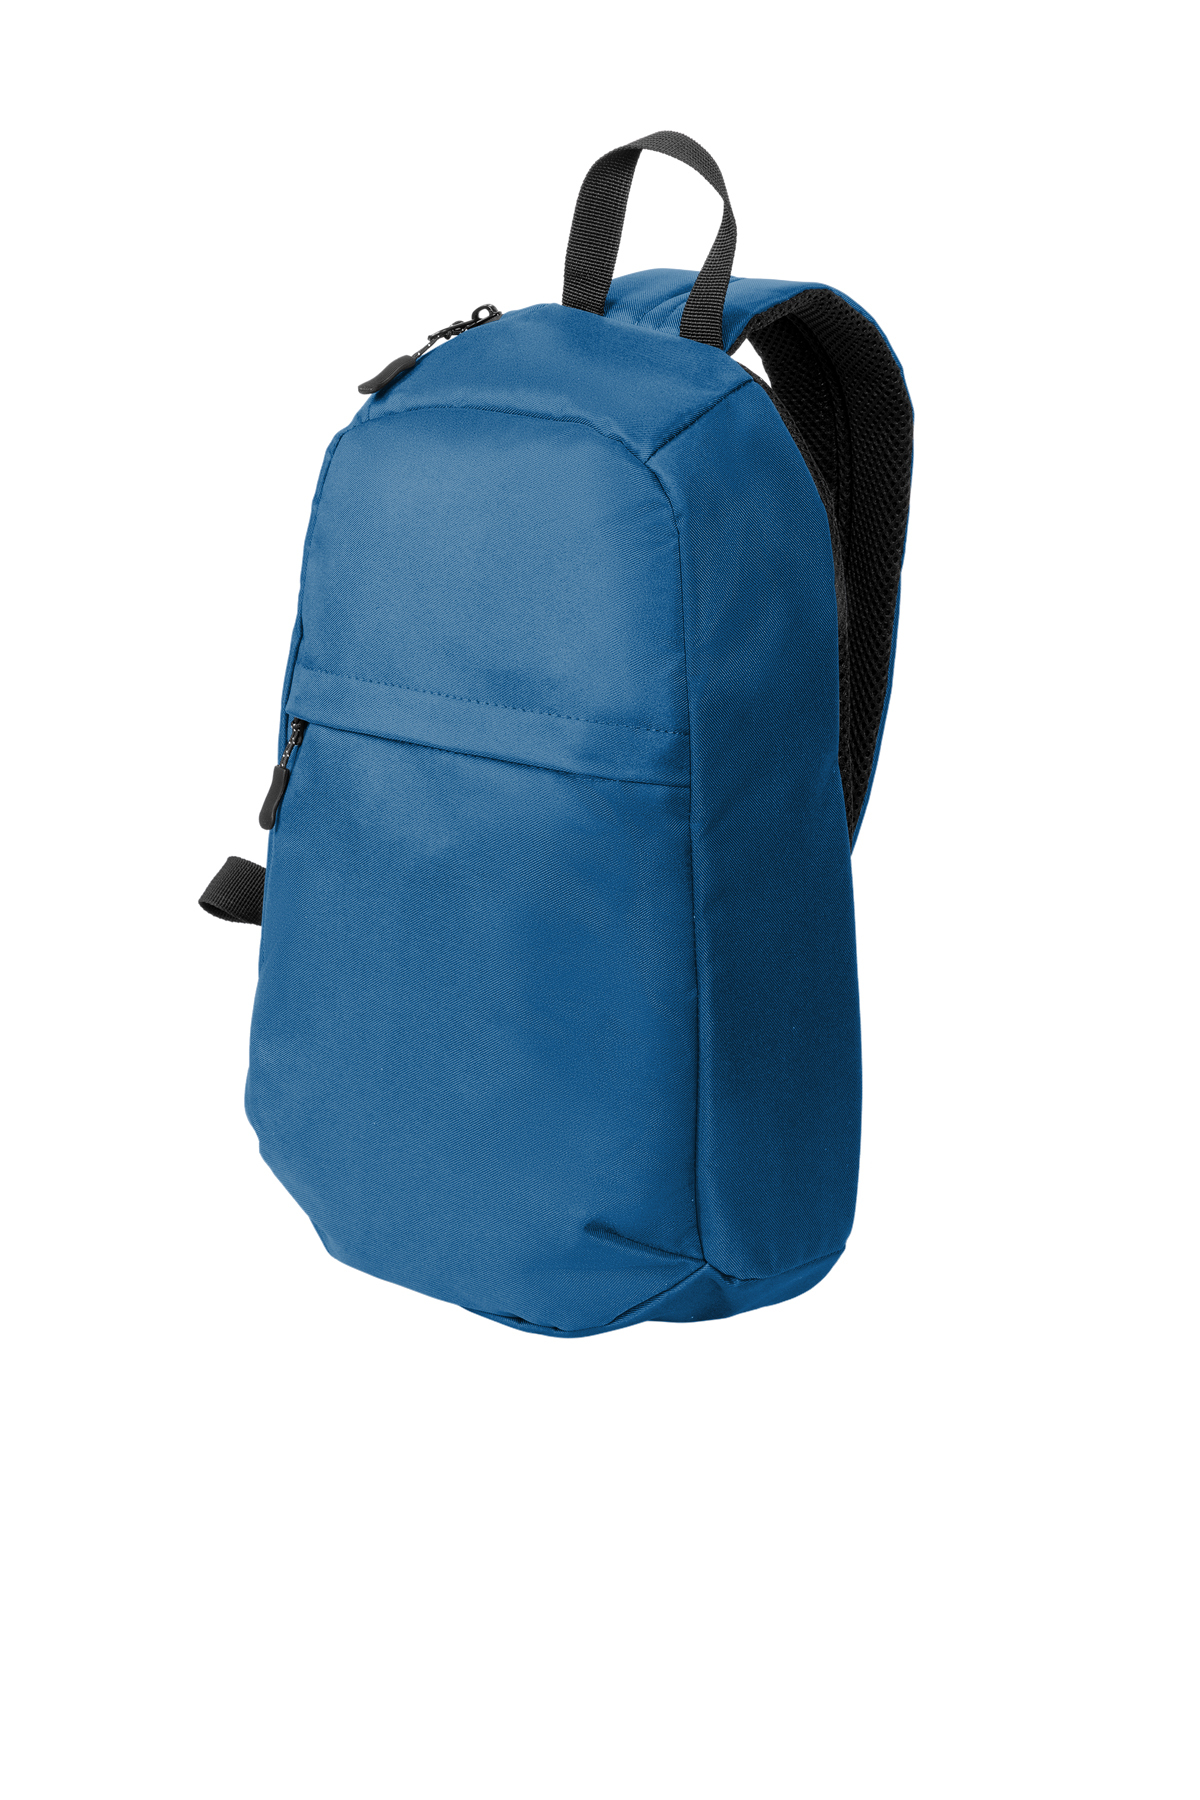 Paragon Laptop Backpack - Protecta